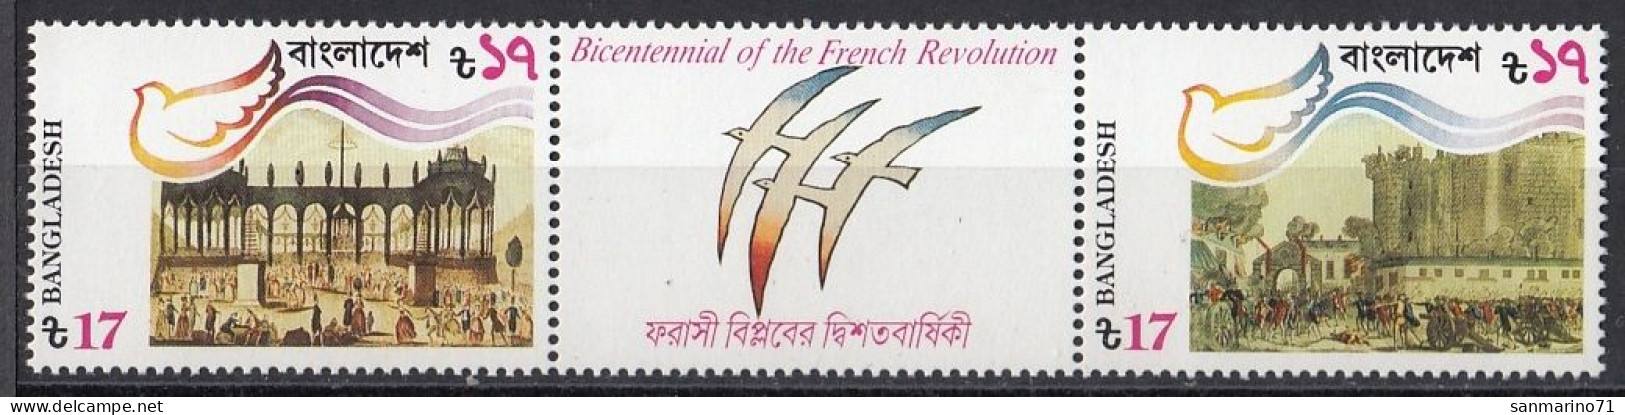 BANGLADESH 305-306,unused - French Revolution